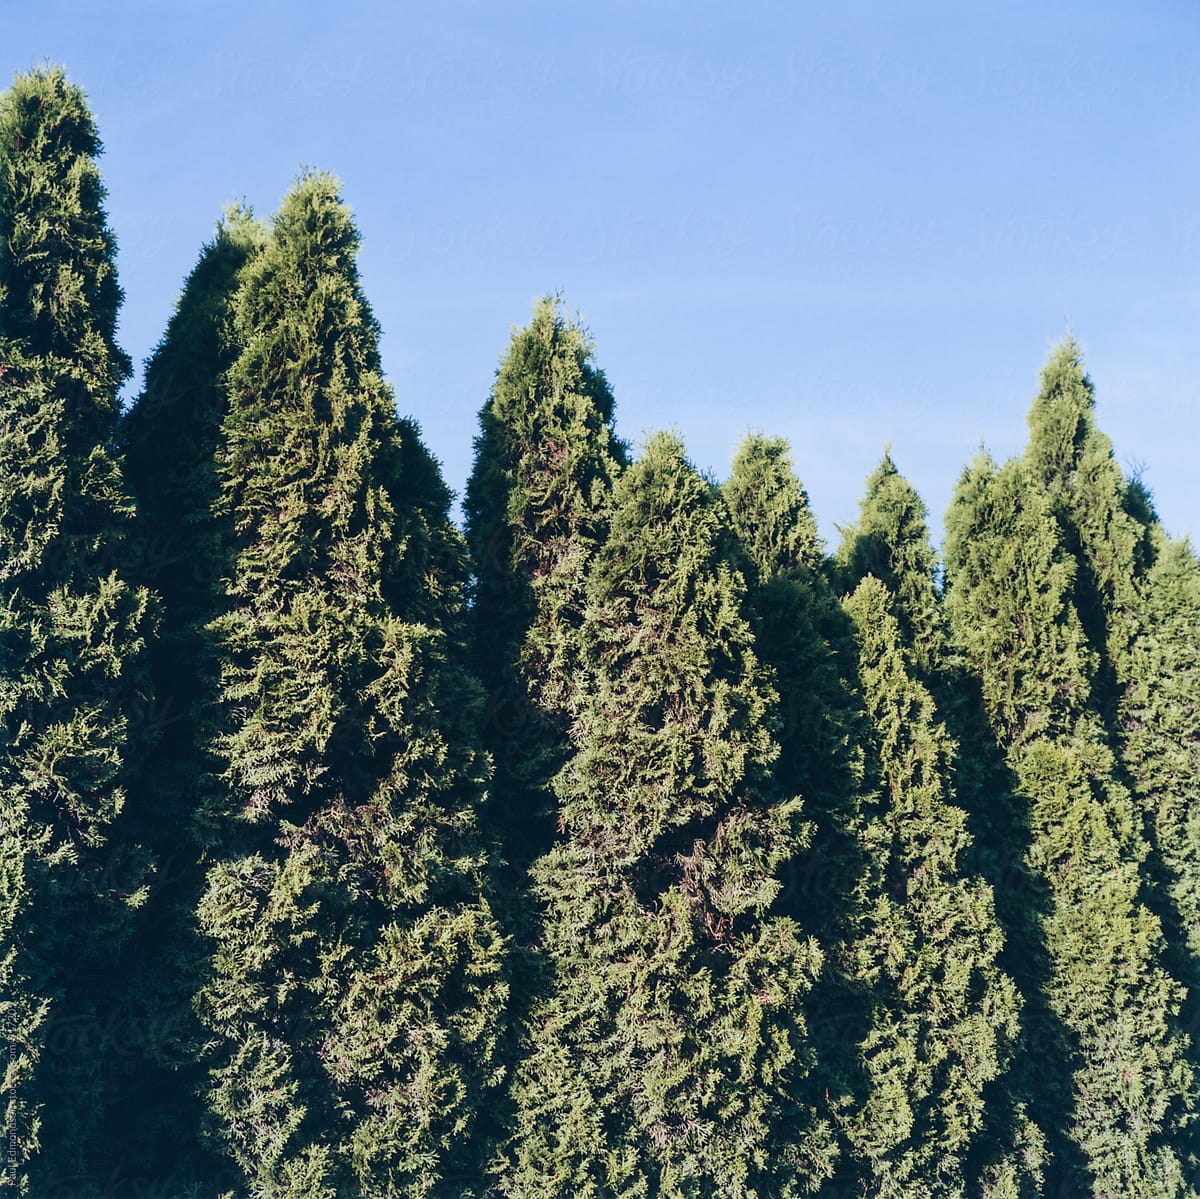 Row of tall evergreen hedges against blue sky